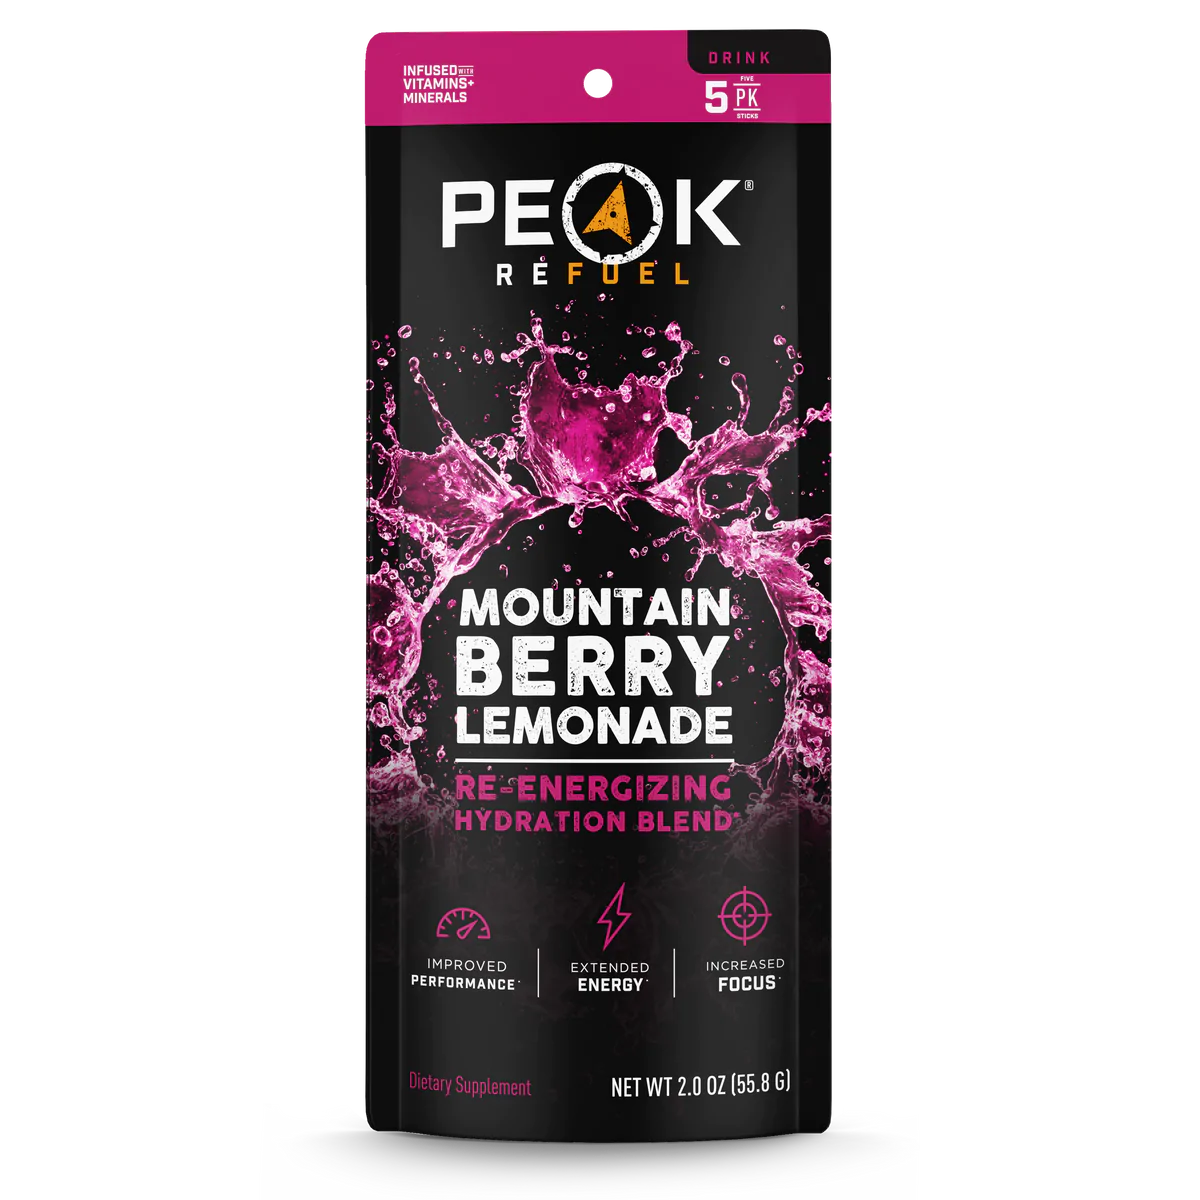 peak refuel mountain berry lemonade drink for sale in san antonio texas at hawkes outdoors 2102512882